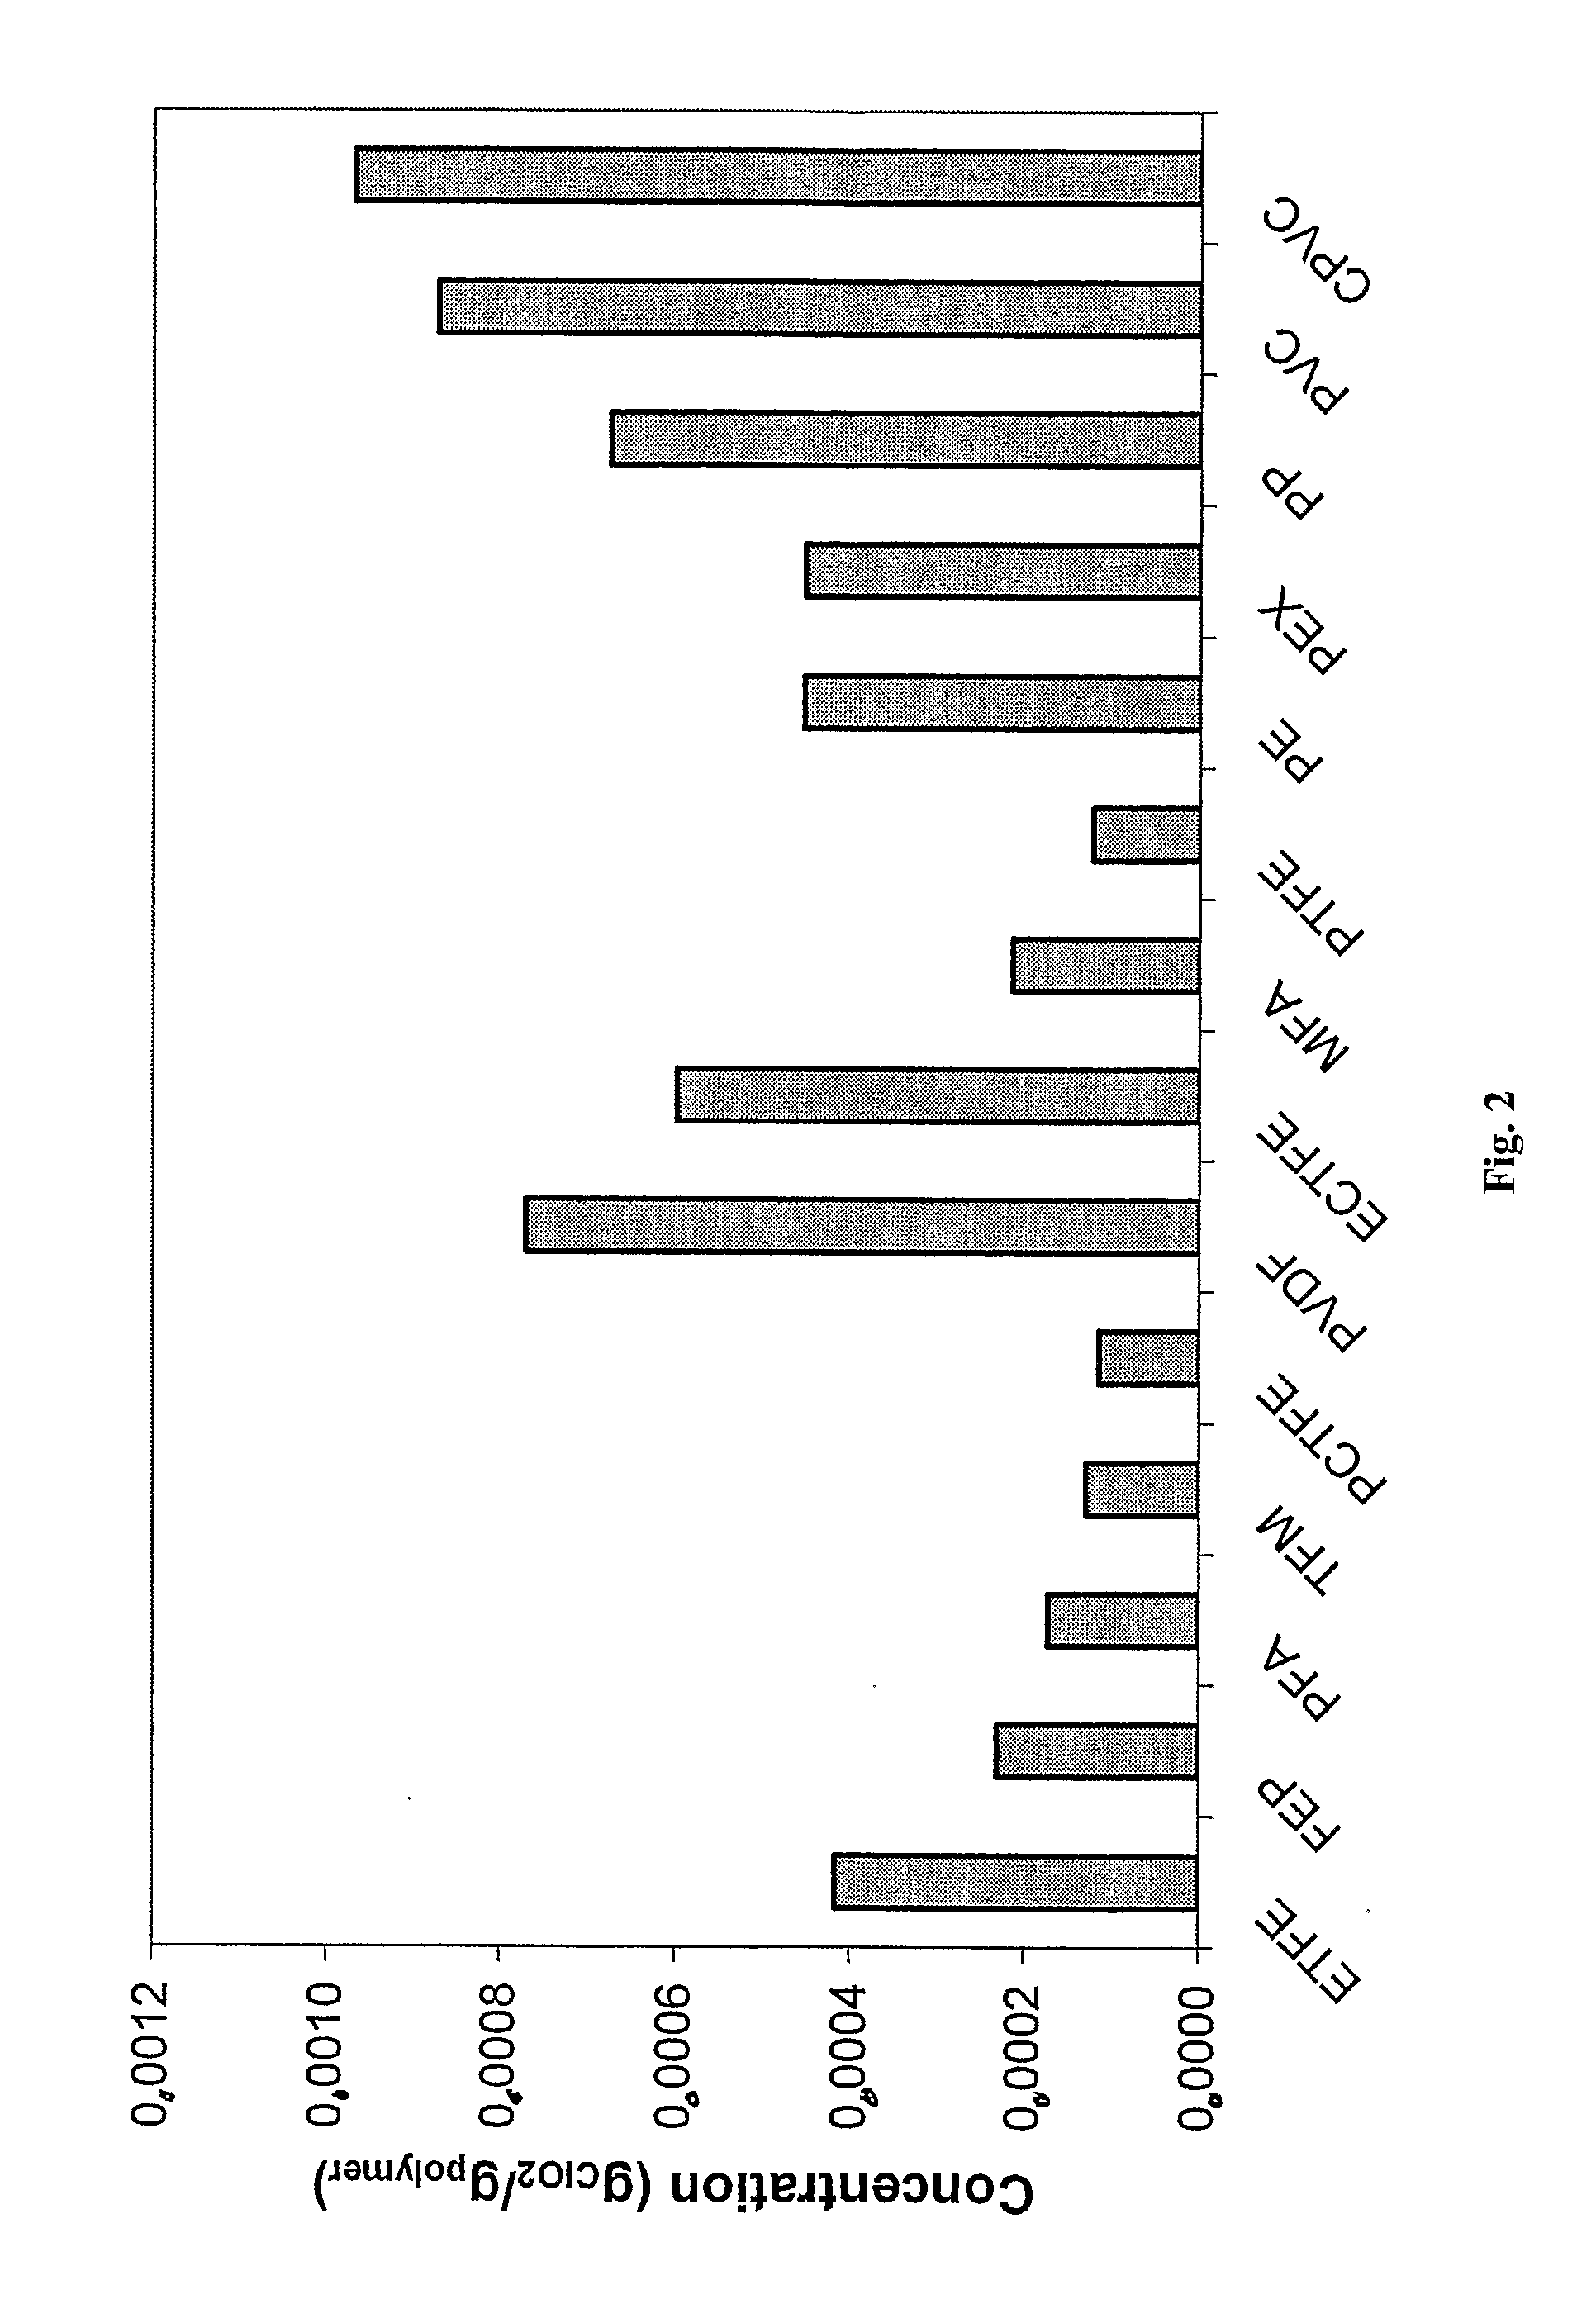 Diffusion retardation in fluoroplastics